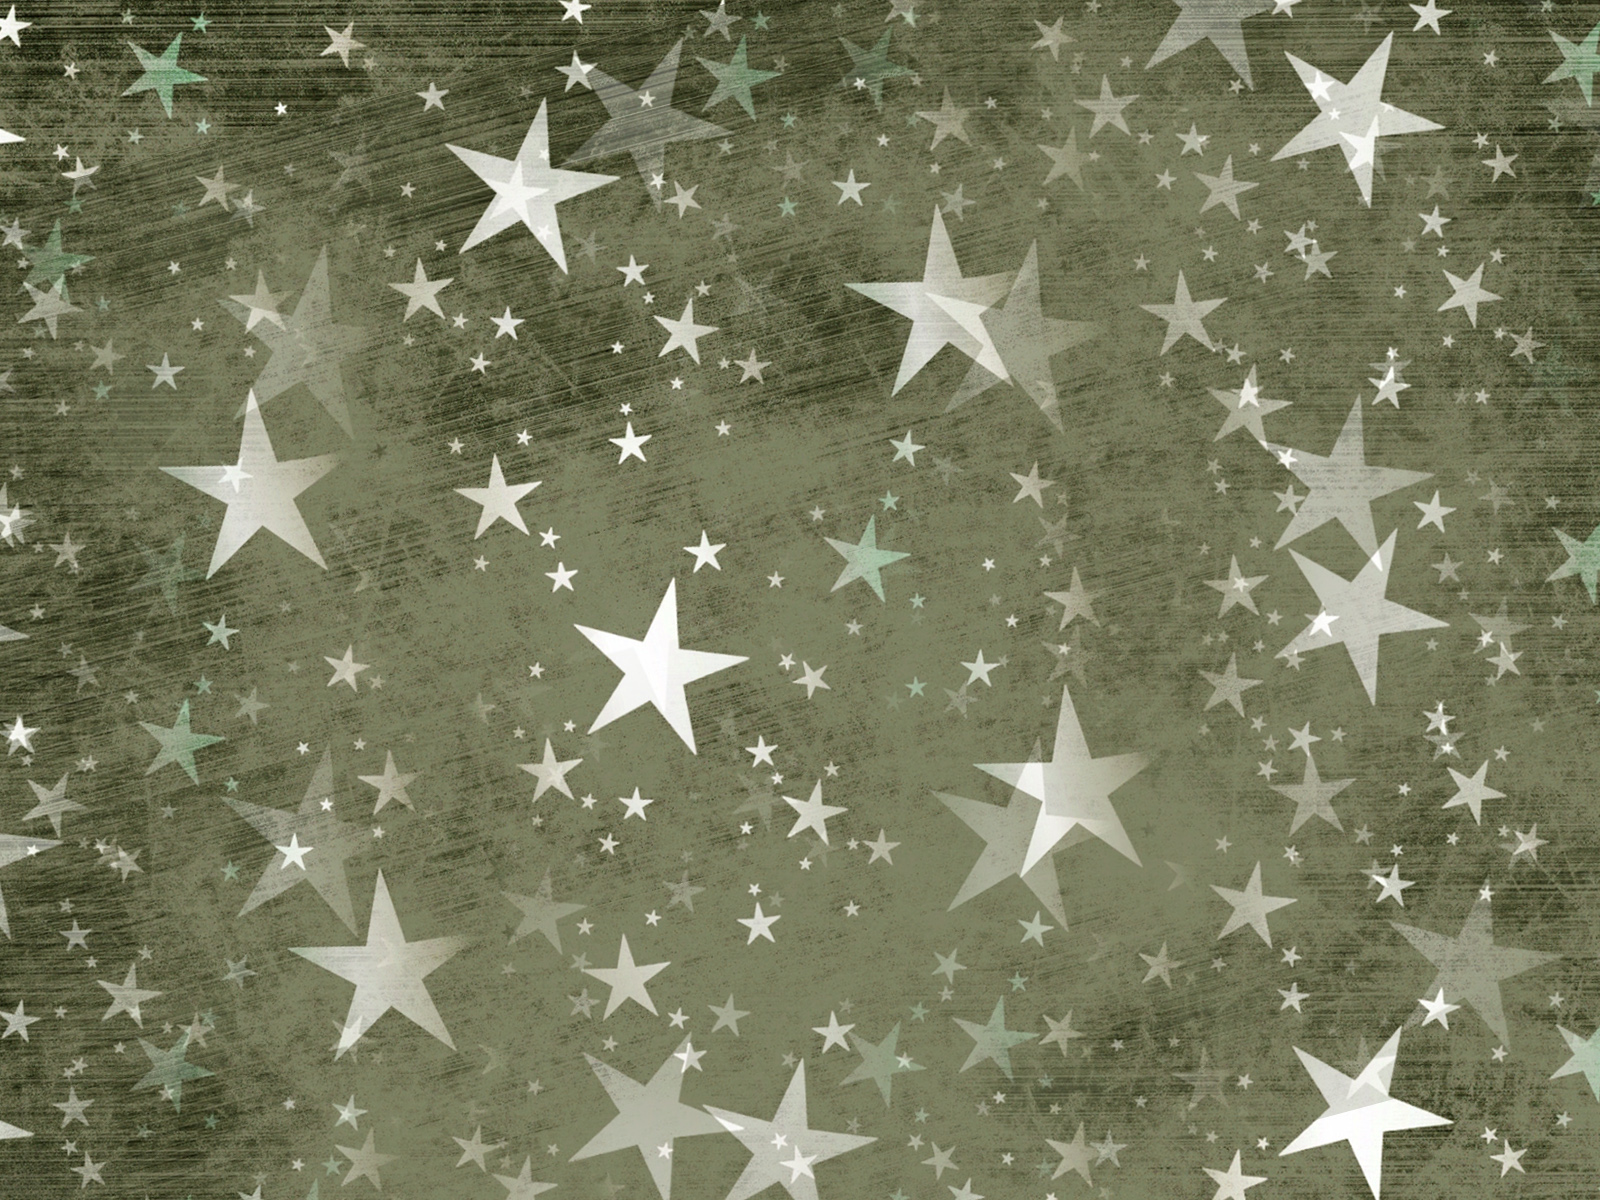 Grunge background with Stars Texture